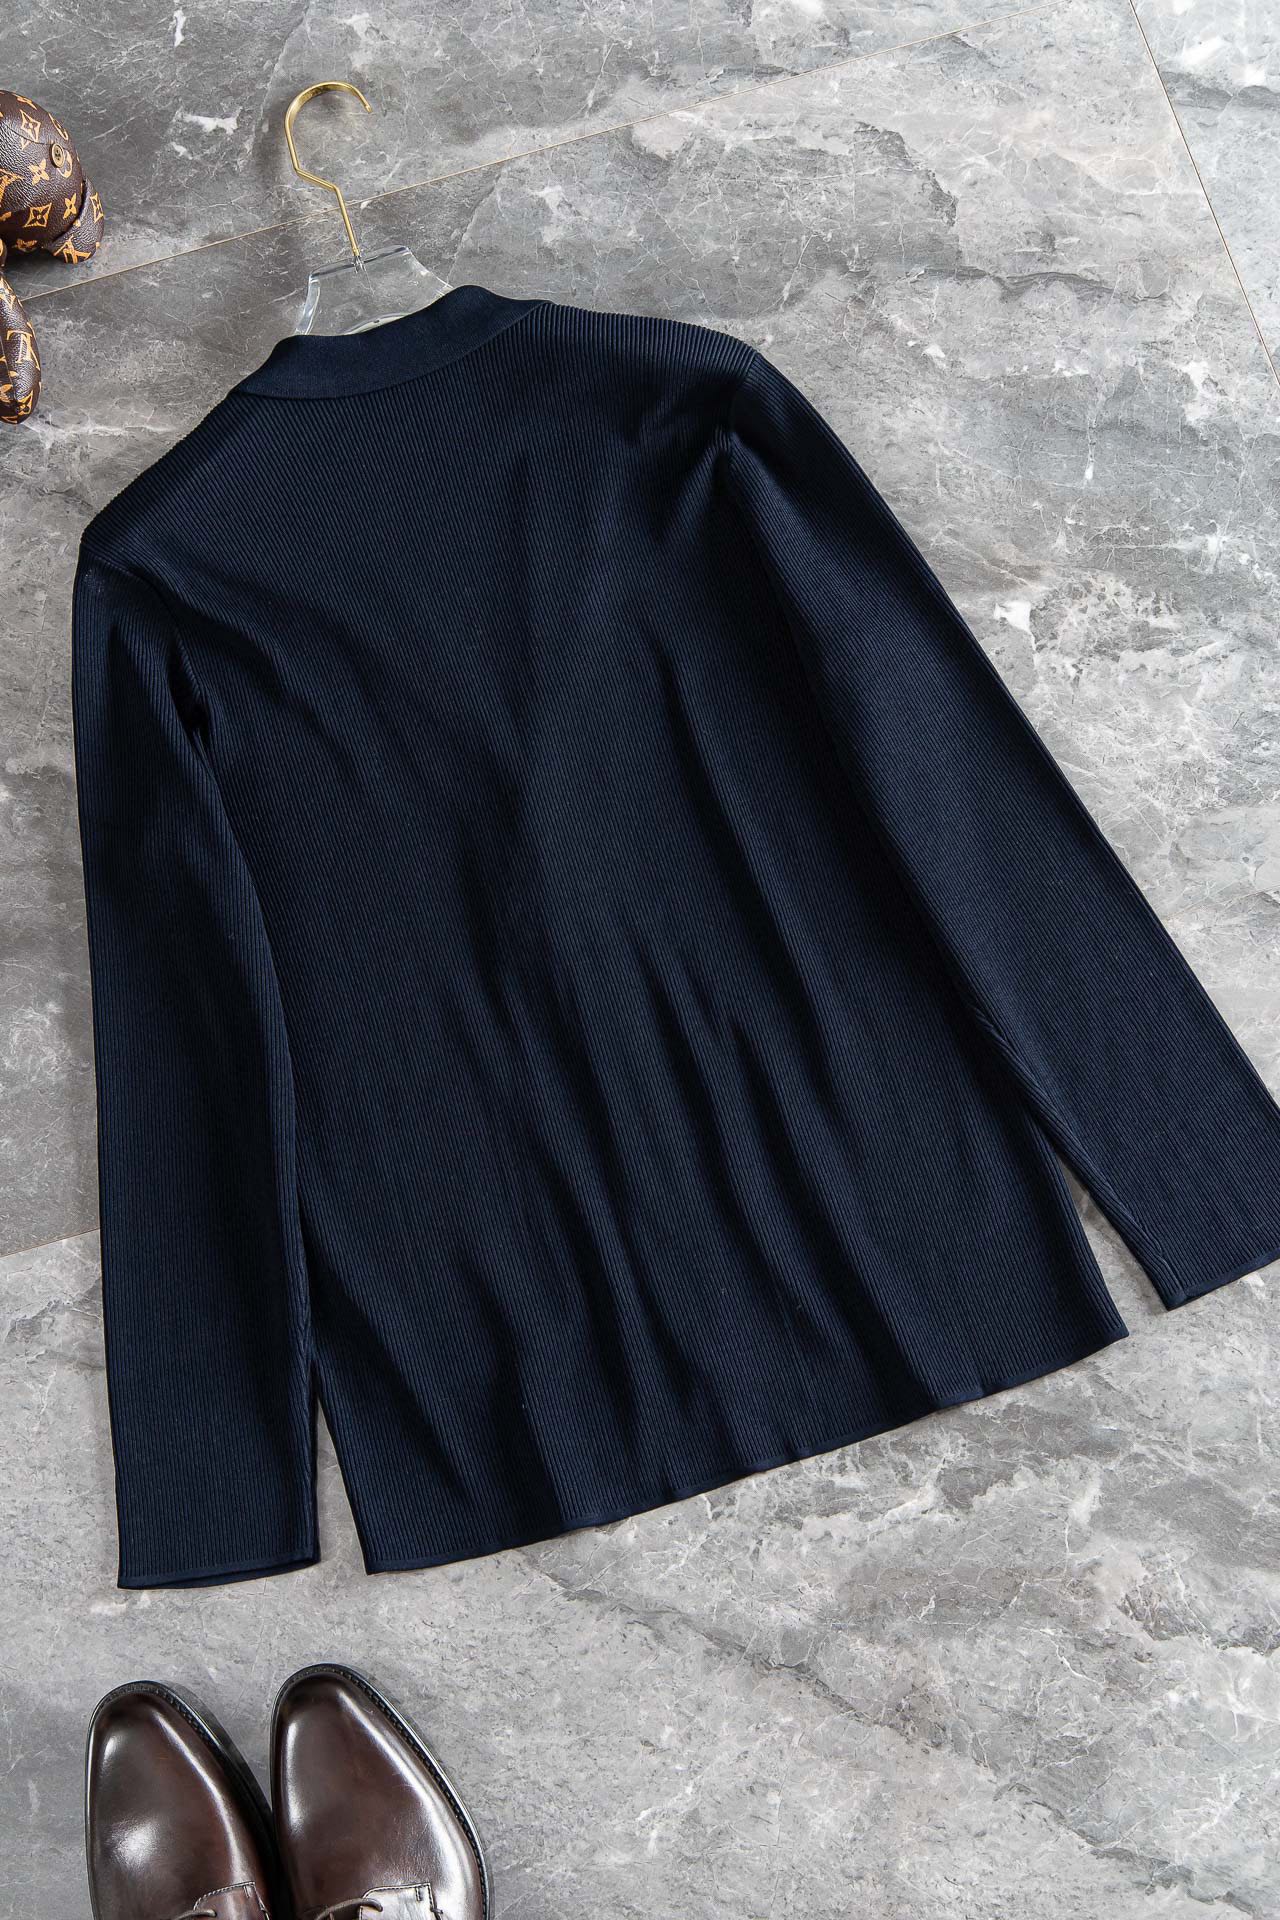 New#杰尼亚Zegna意式休闲西装!是一款时尚而舒适的产品让您在各种场合中都能自信得体地展现风采这款西